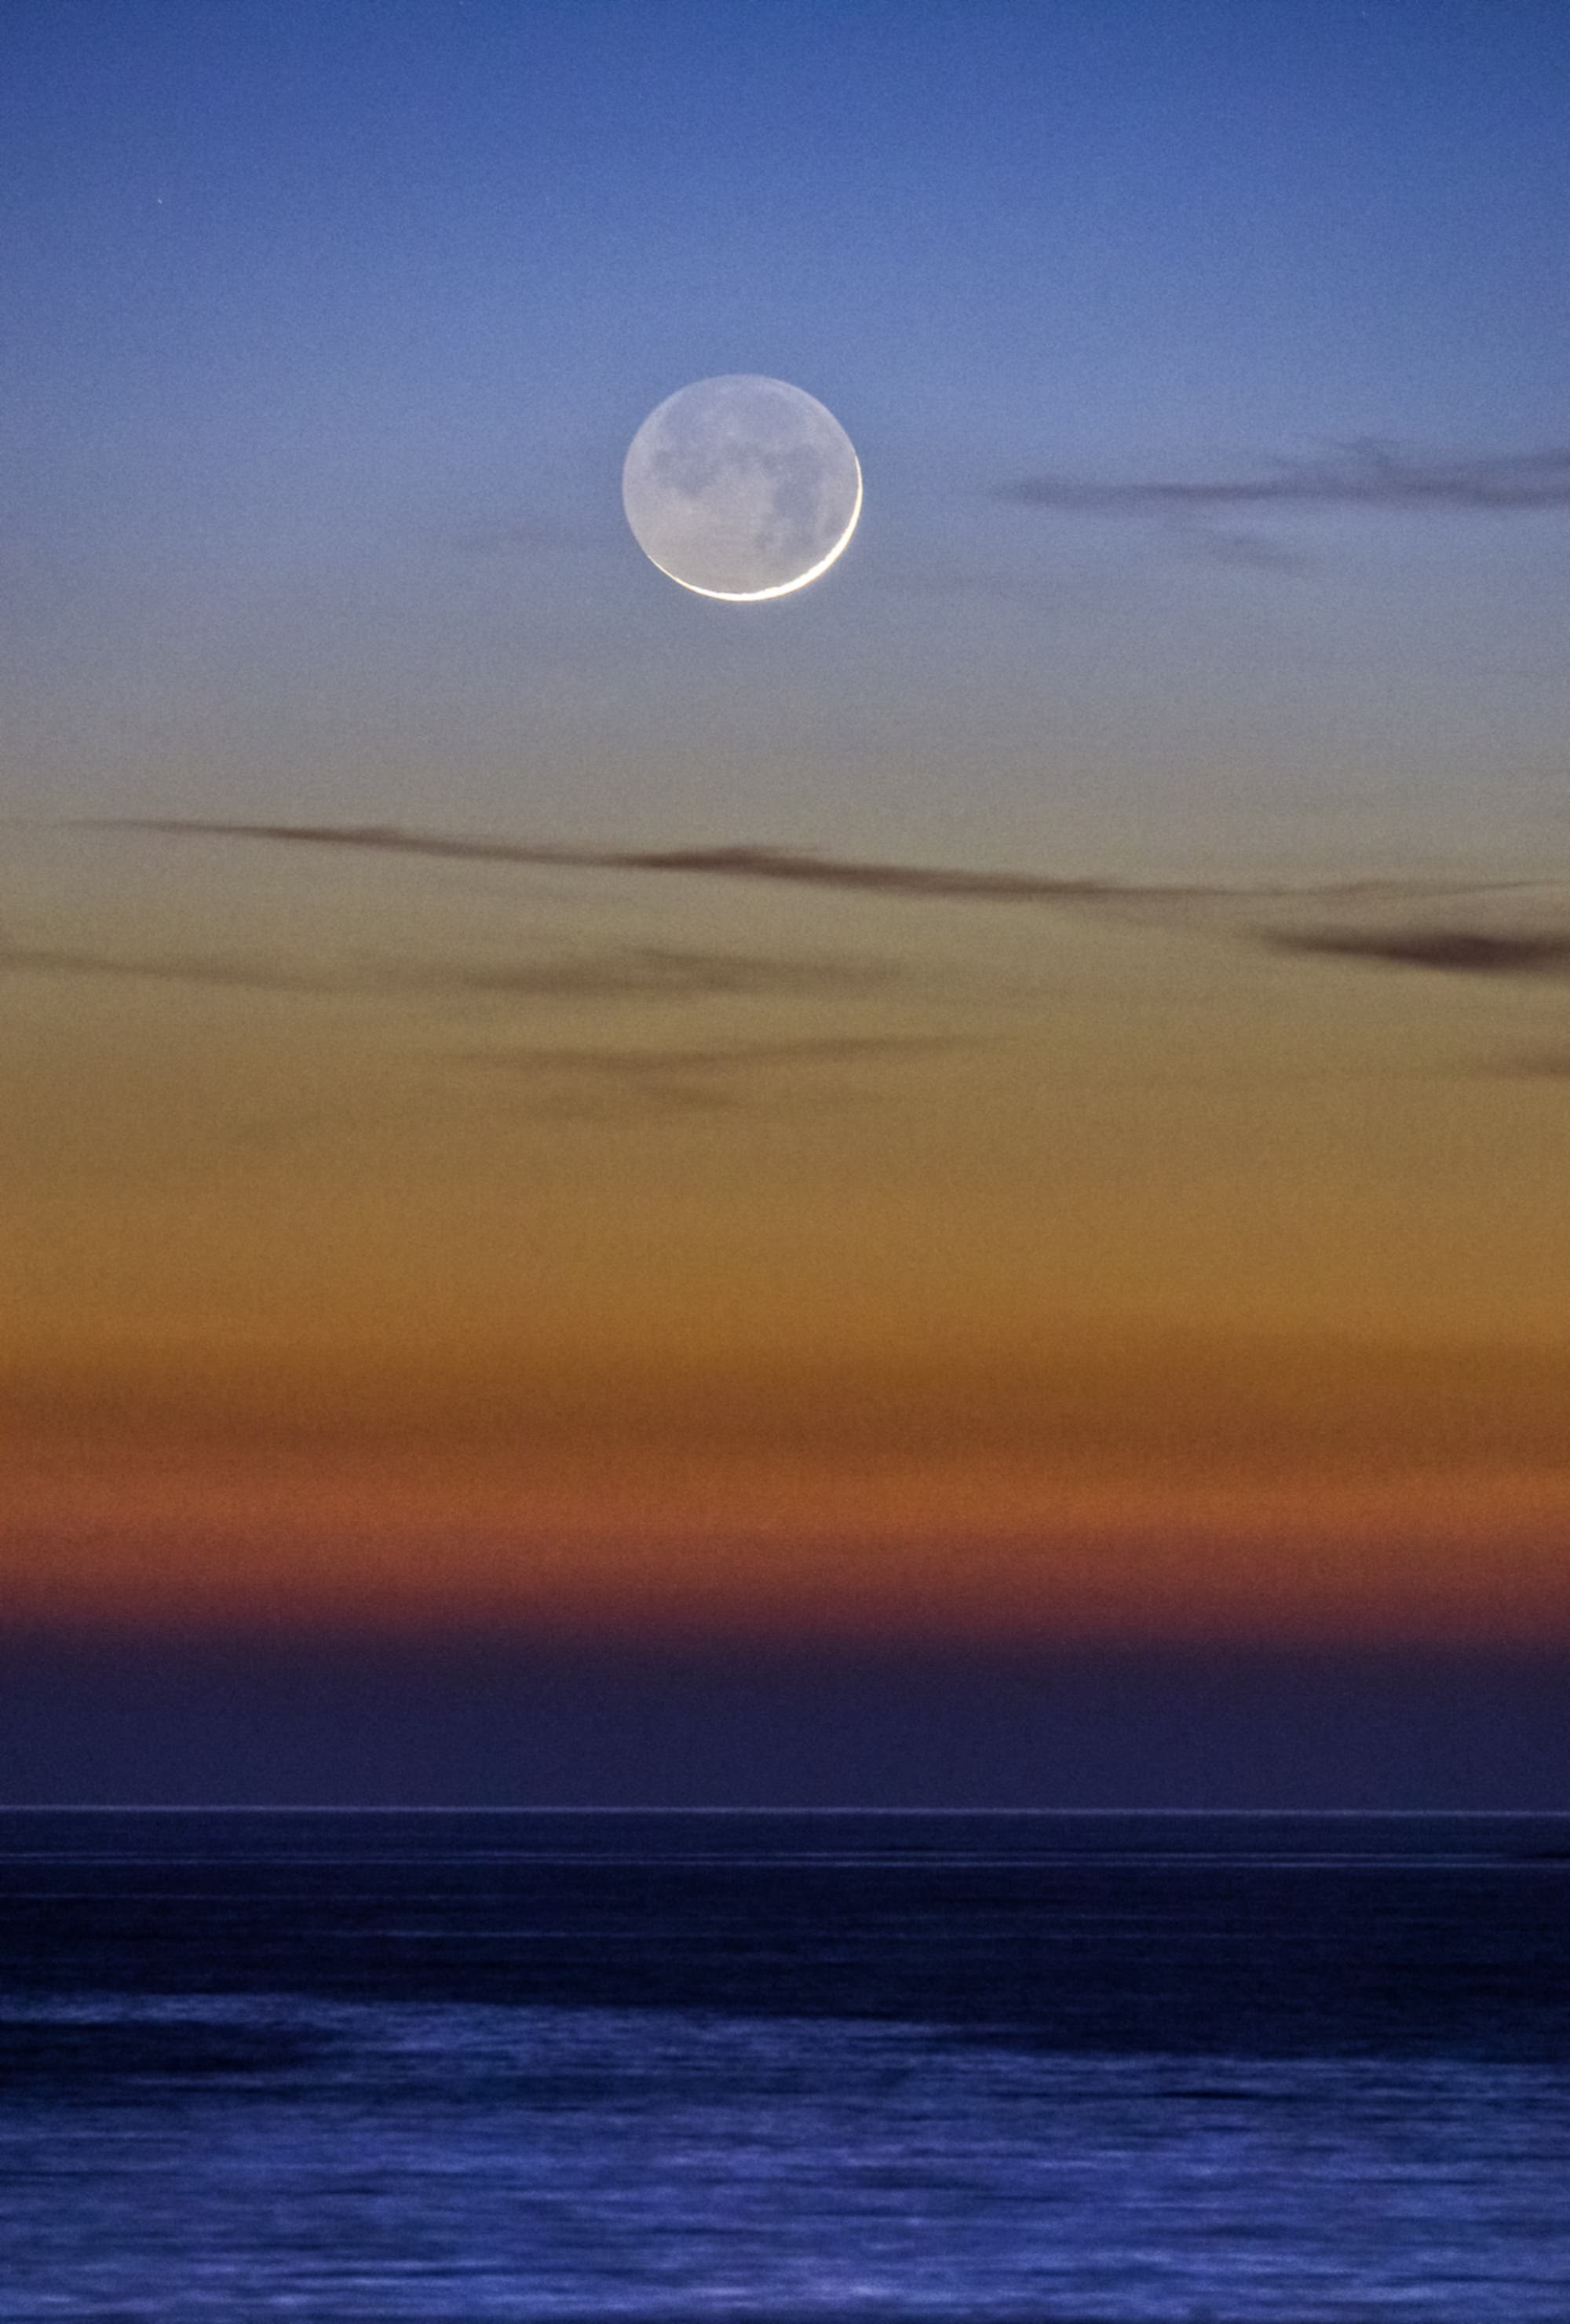 Crescent Moon 2% Punta secca Sicily-Italy 